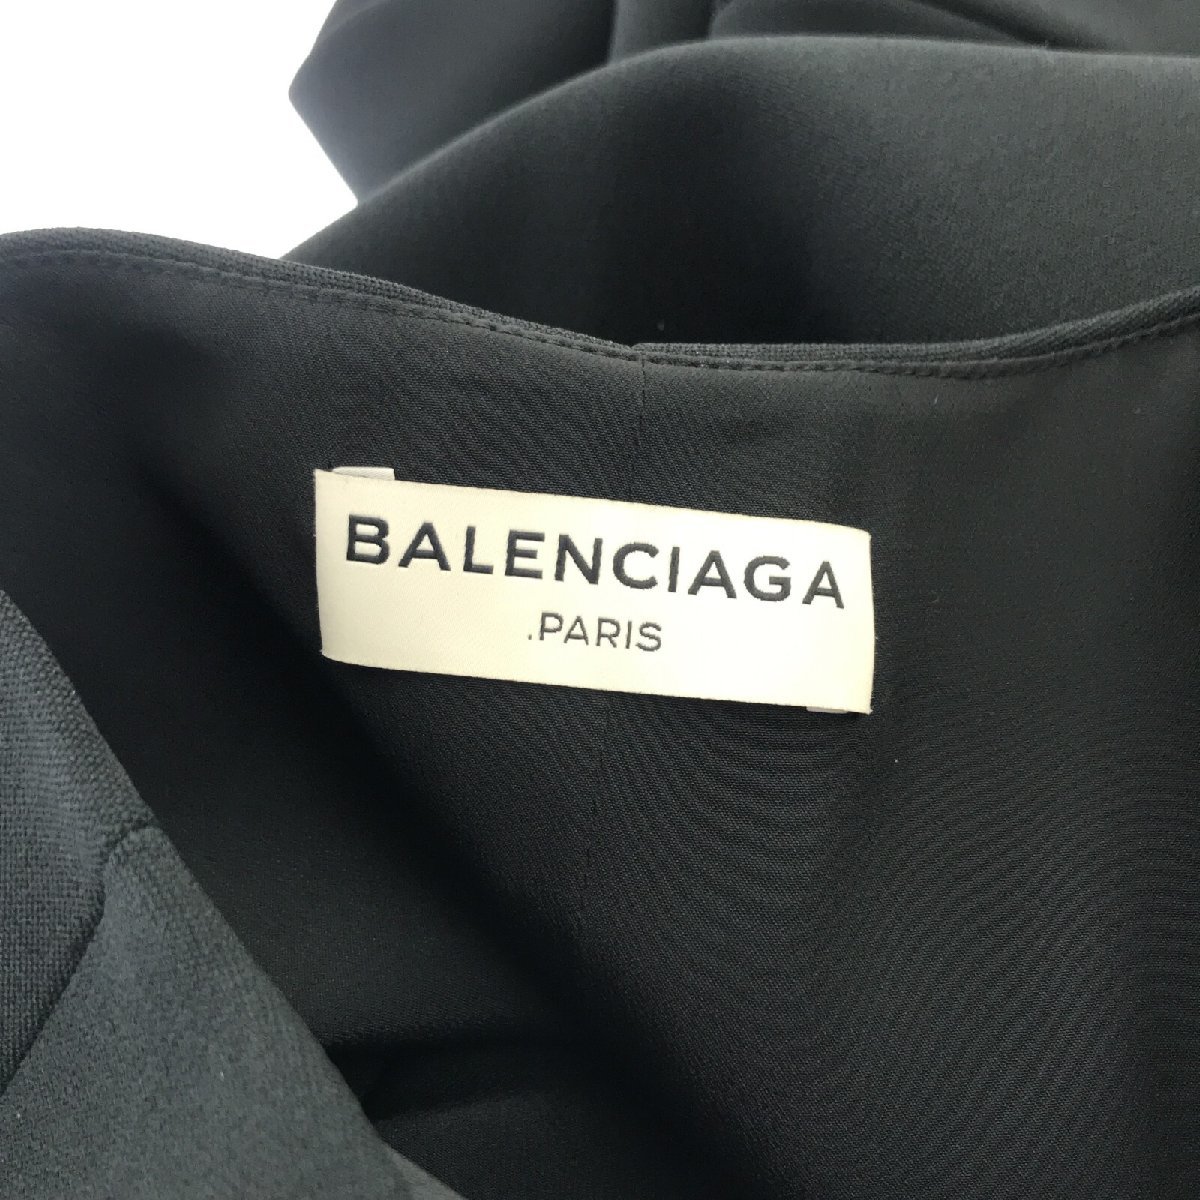 BALENCIAGA Balenciaga One-piece no sleeve One-piece black group rayon used lady's 